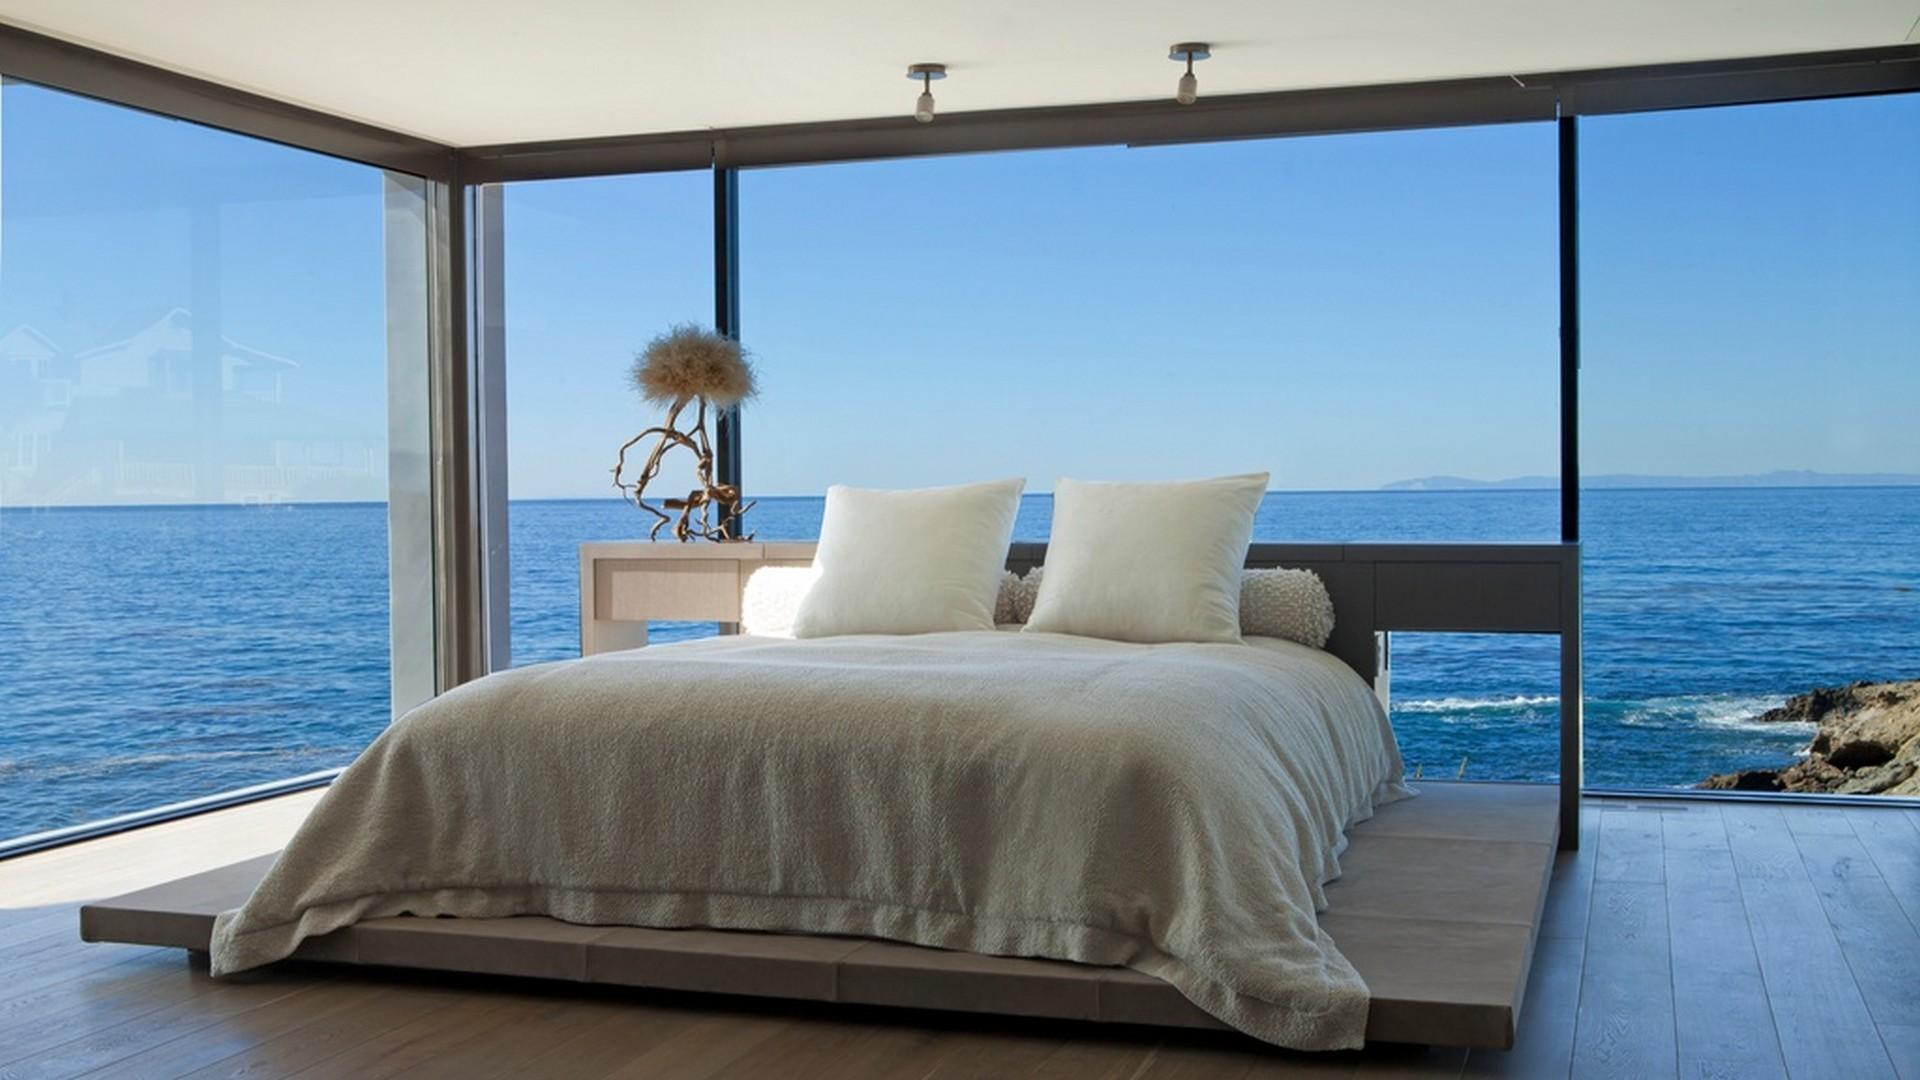 Домик с видом на море. Спальня с видом на океан. Вид на океан. Дом с панорамными окнами с видом на море. Панорамный вид на океан.